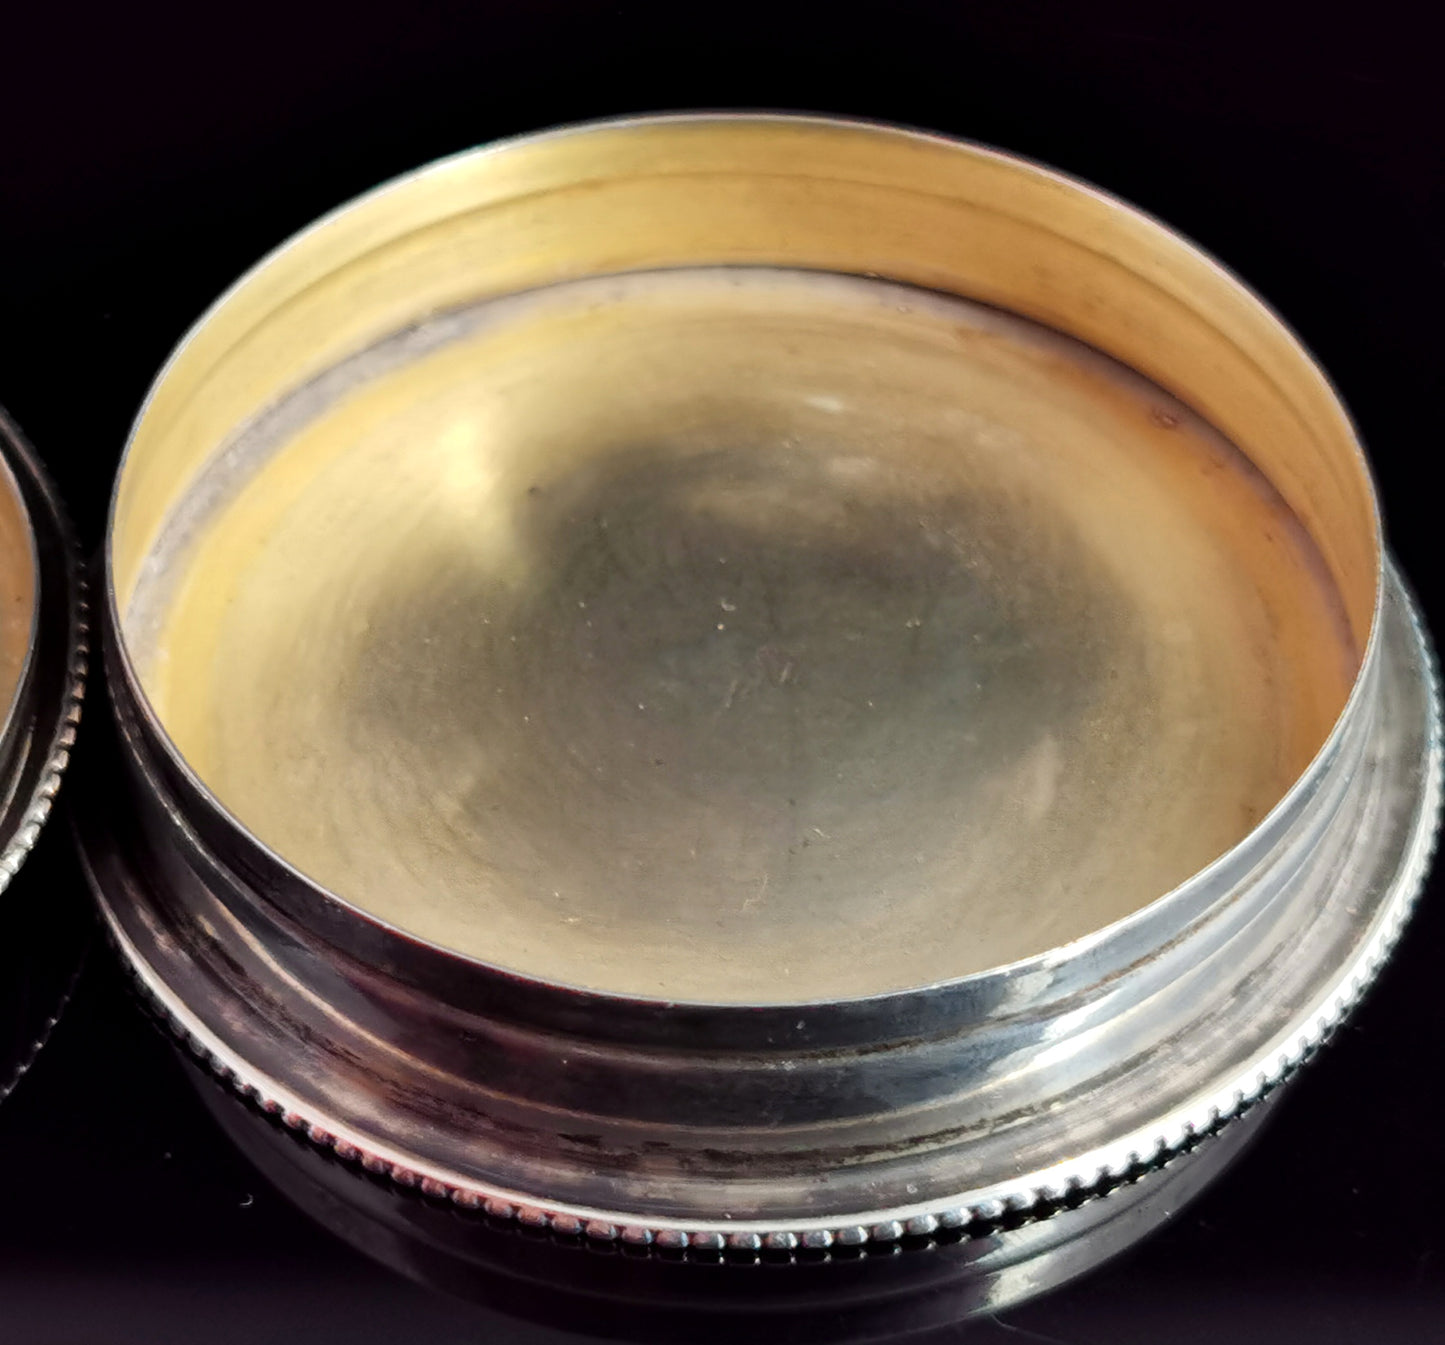 Antique silver snuff box, George III revival